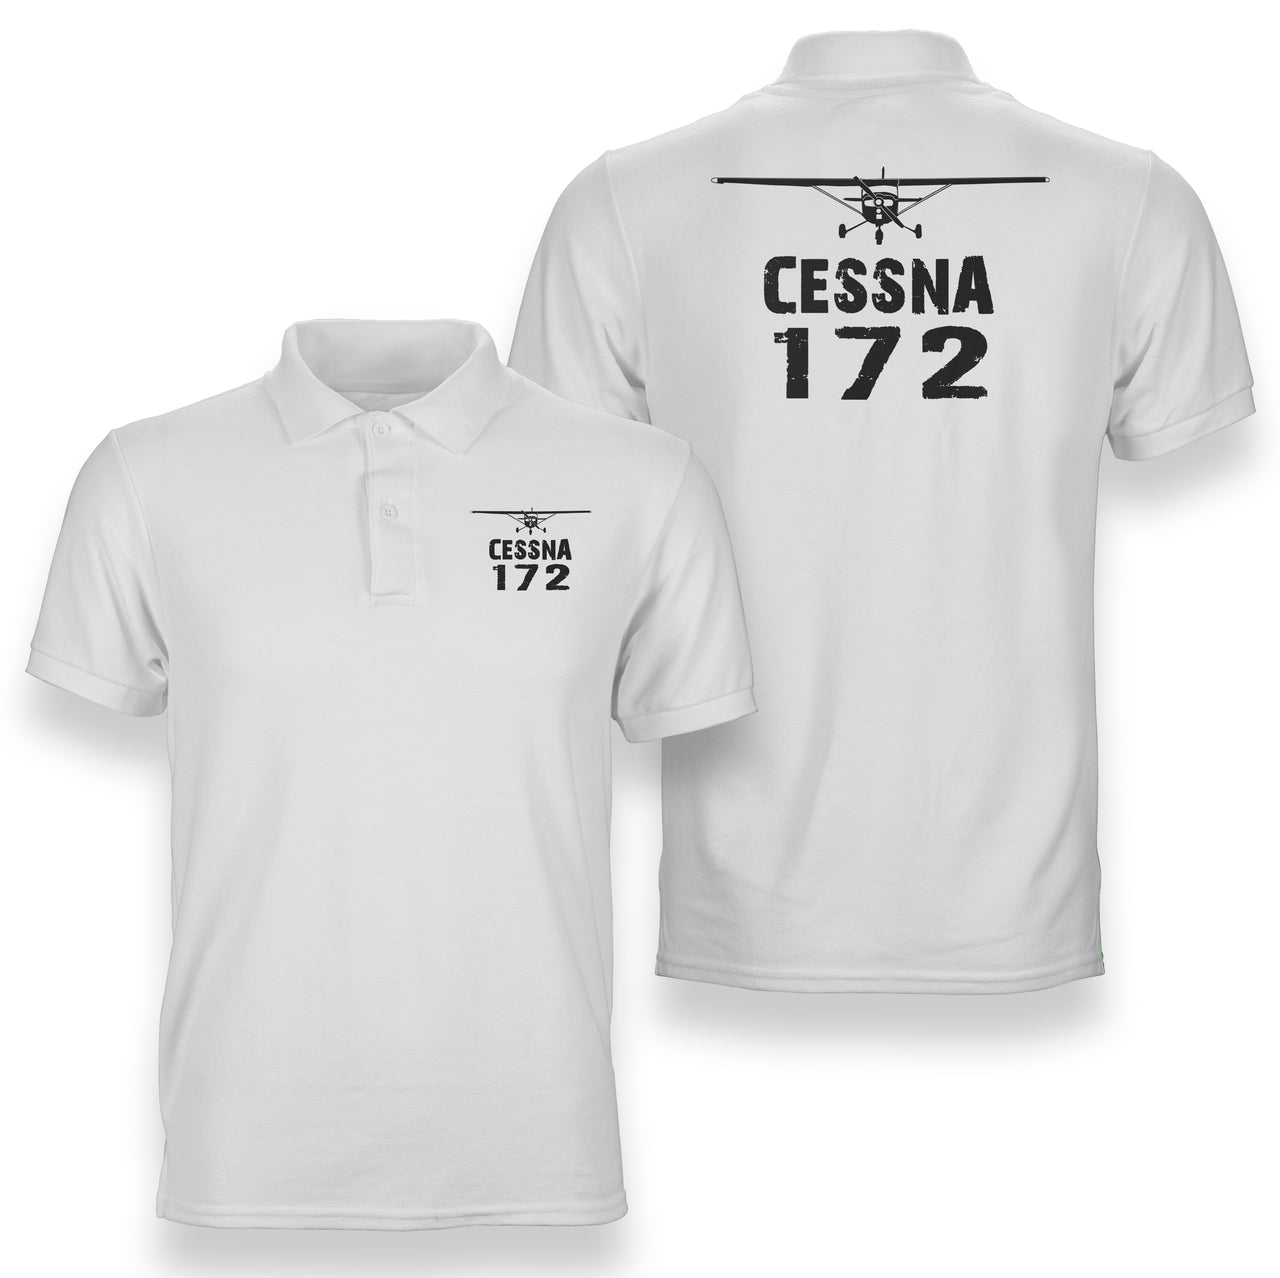 Cessna 172 & Plane Designed Double Side Polo T-Shirts